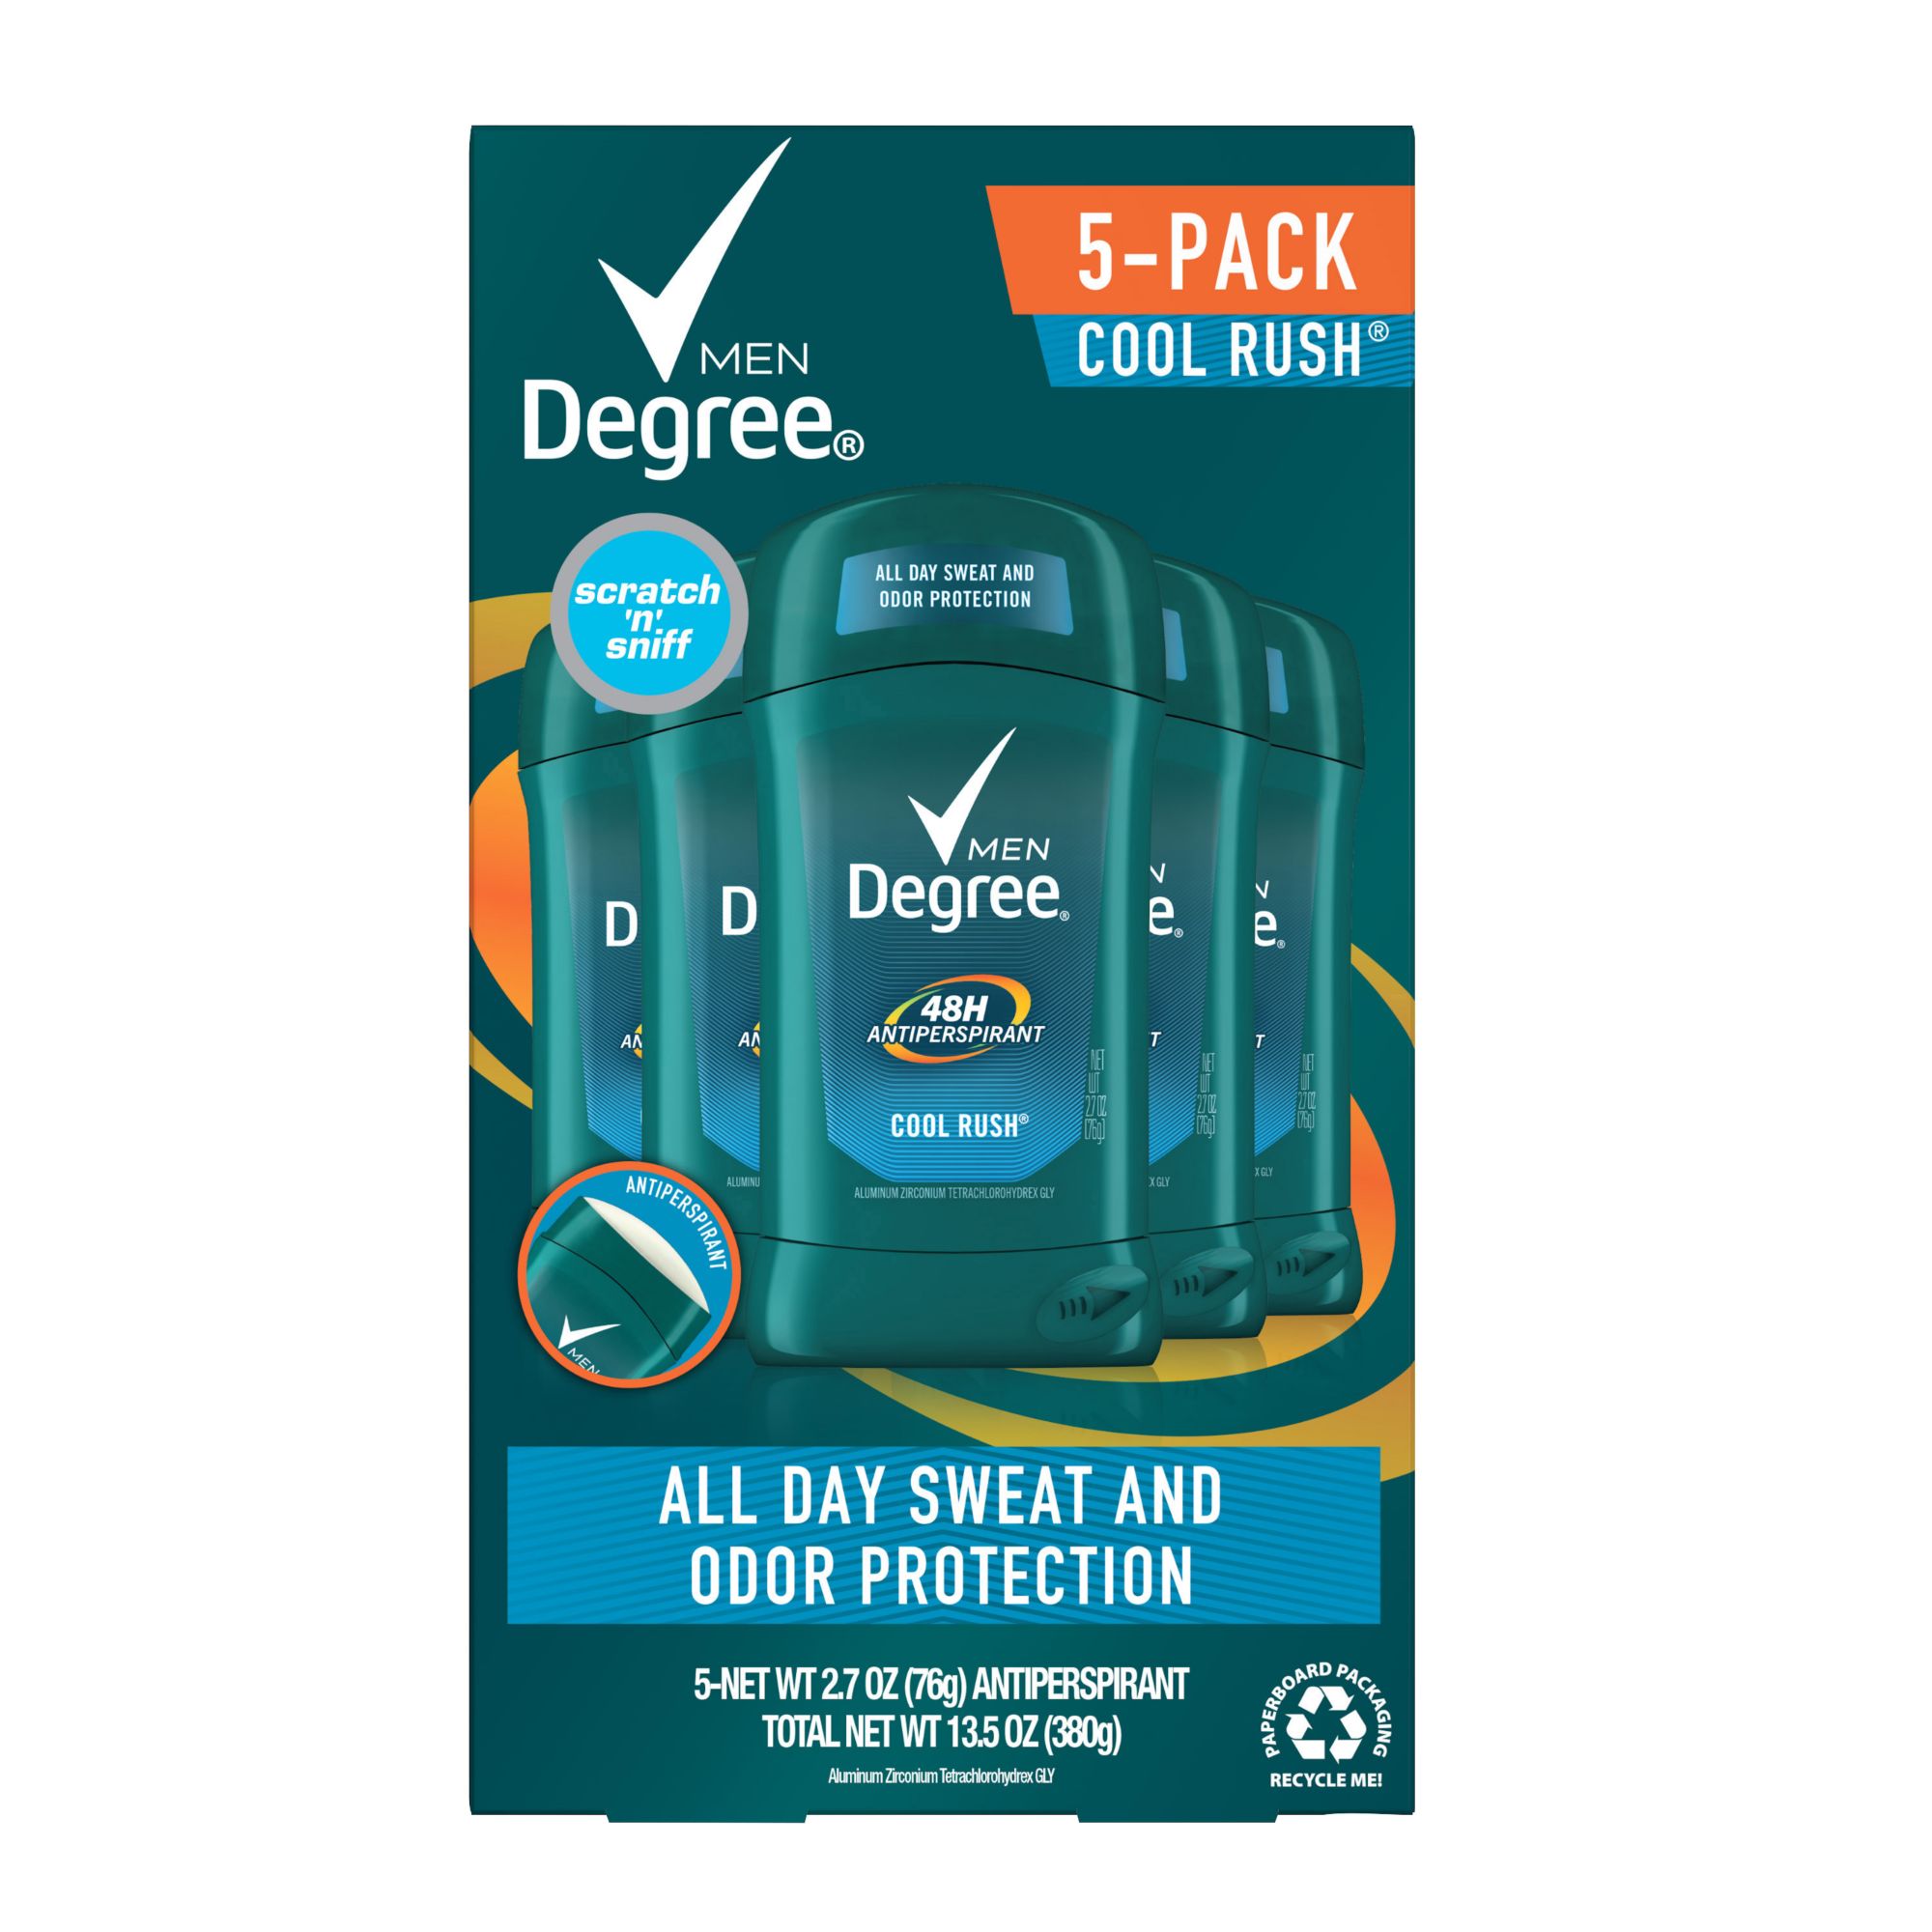 Degree Men Cool Comfort Antiperspirant Deodorant Stick, 76 g 